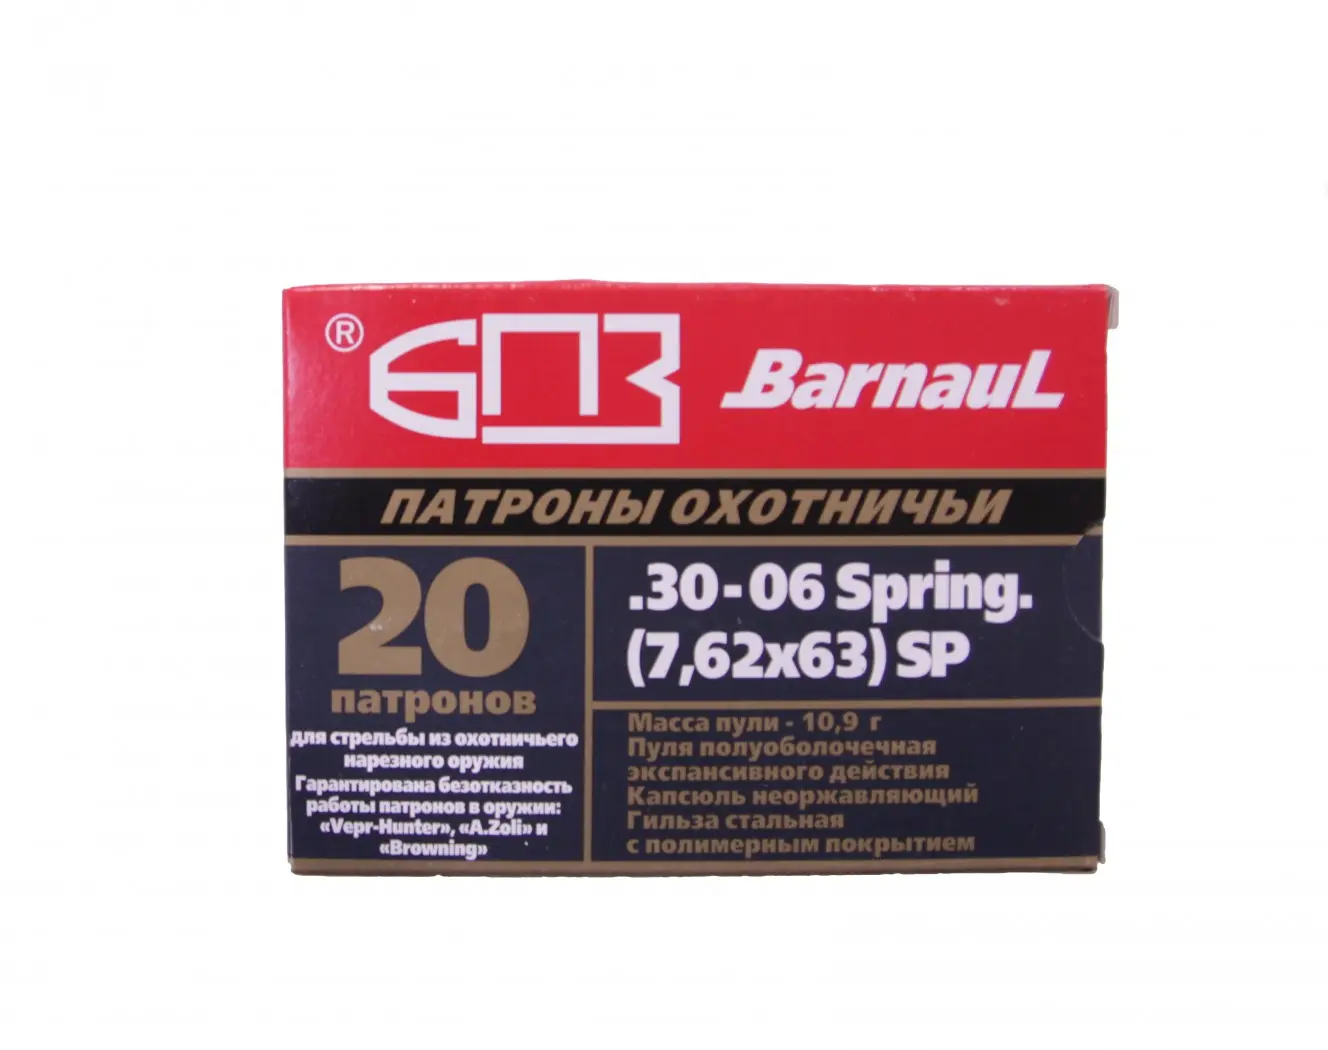 Патрон 7,62 х63 (30-06) ПО 10,9 (Барнаул)